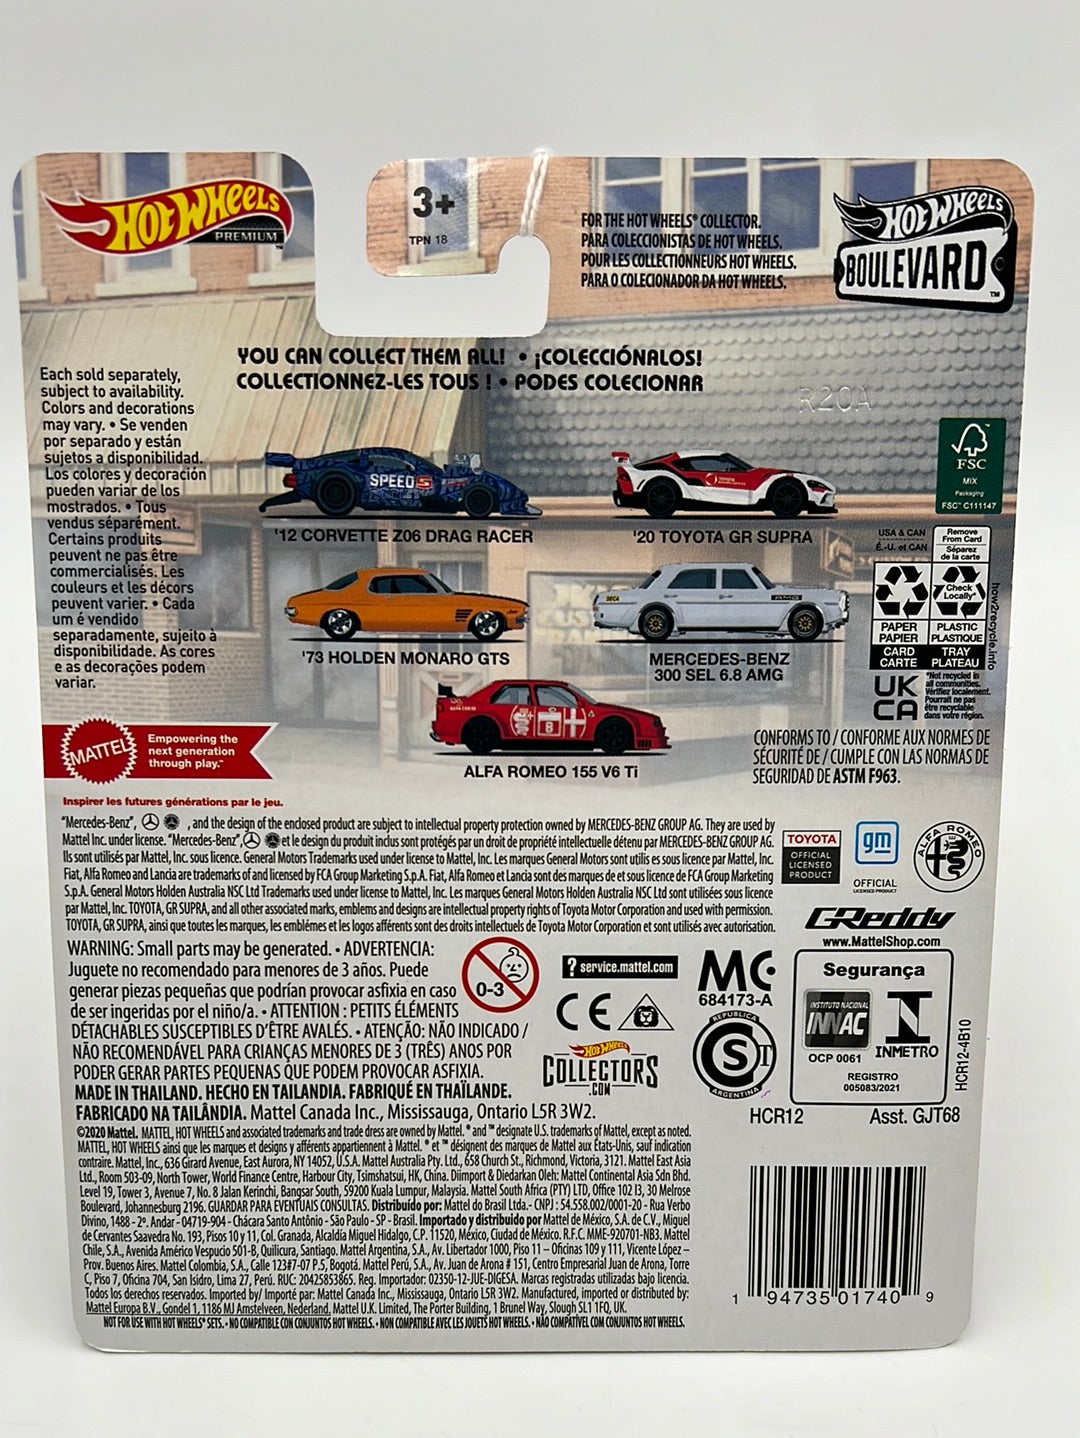 Hot Wheels Premium Boulevard #51 ‘12 Corvette Z06 Drag Racer 263A